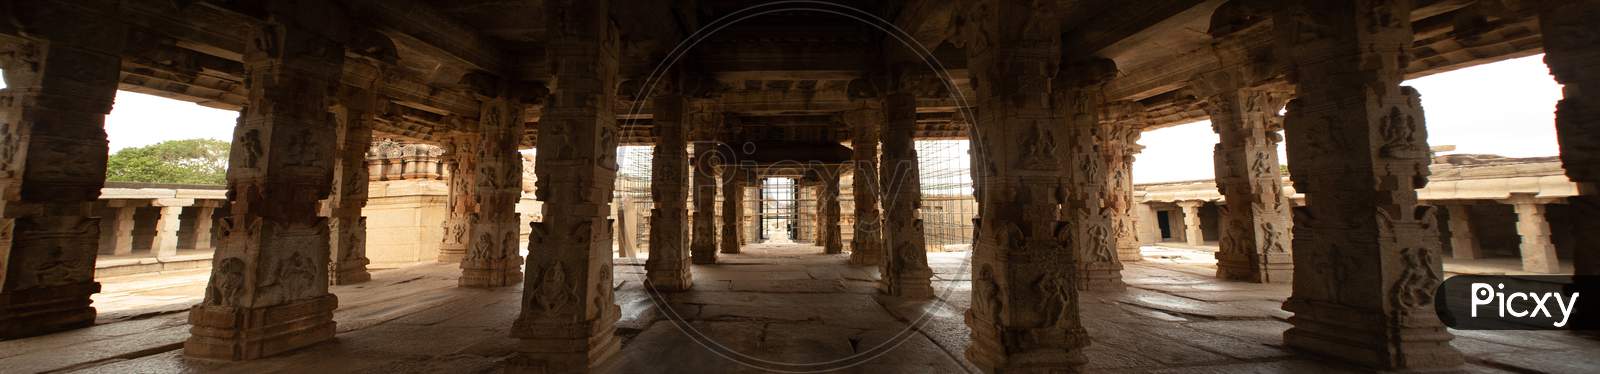 Inner Panoramic View Of Ruined Sri Krishna Temple Rock Piller Architecture Of Hampi, India.